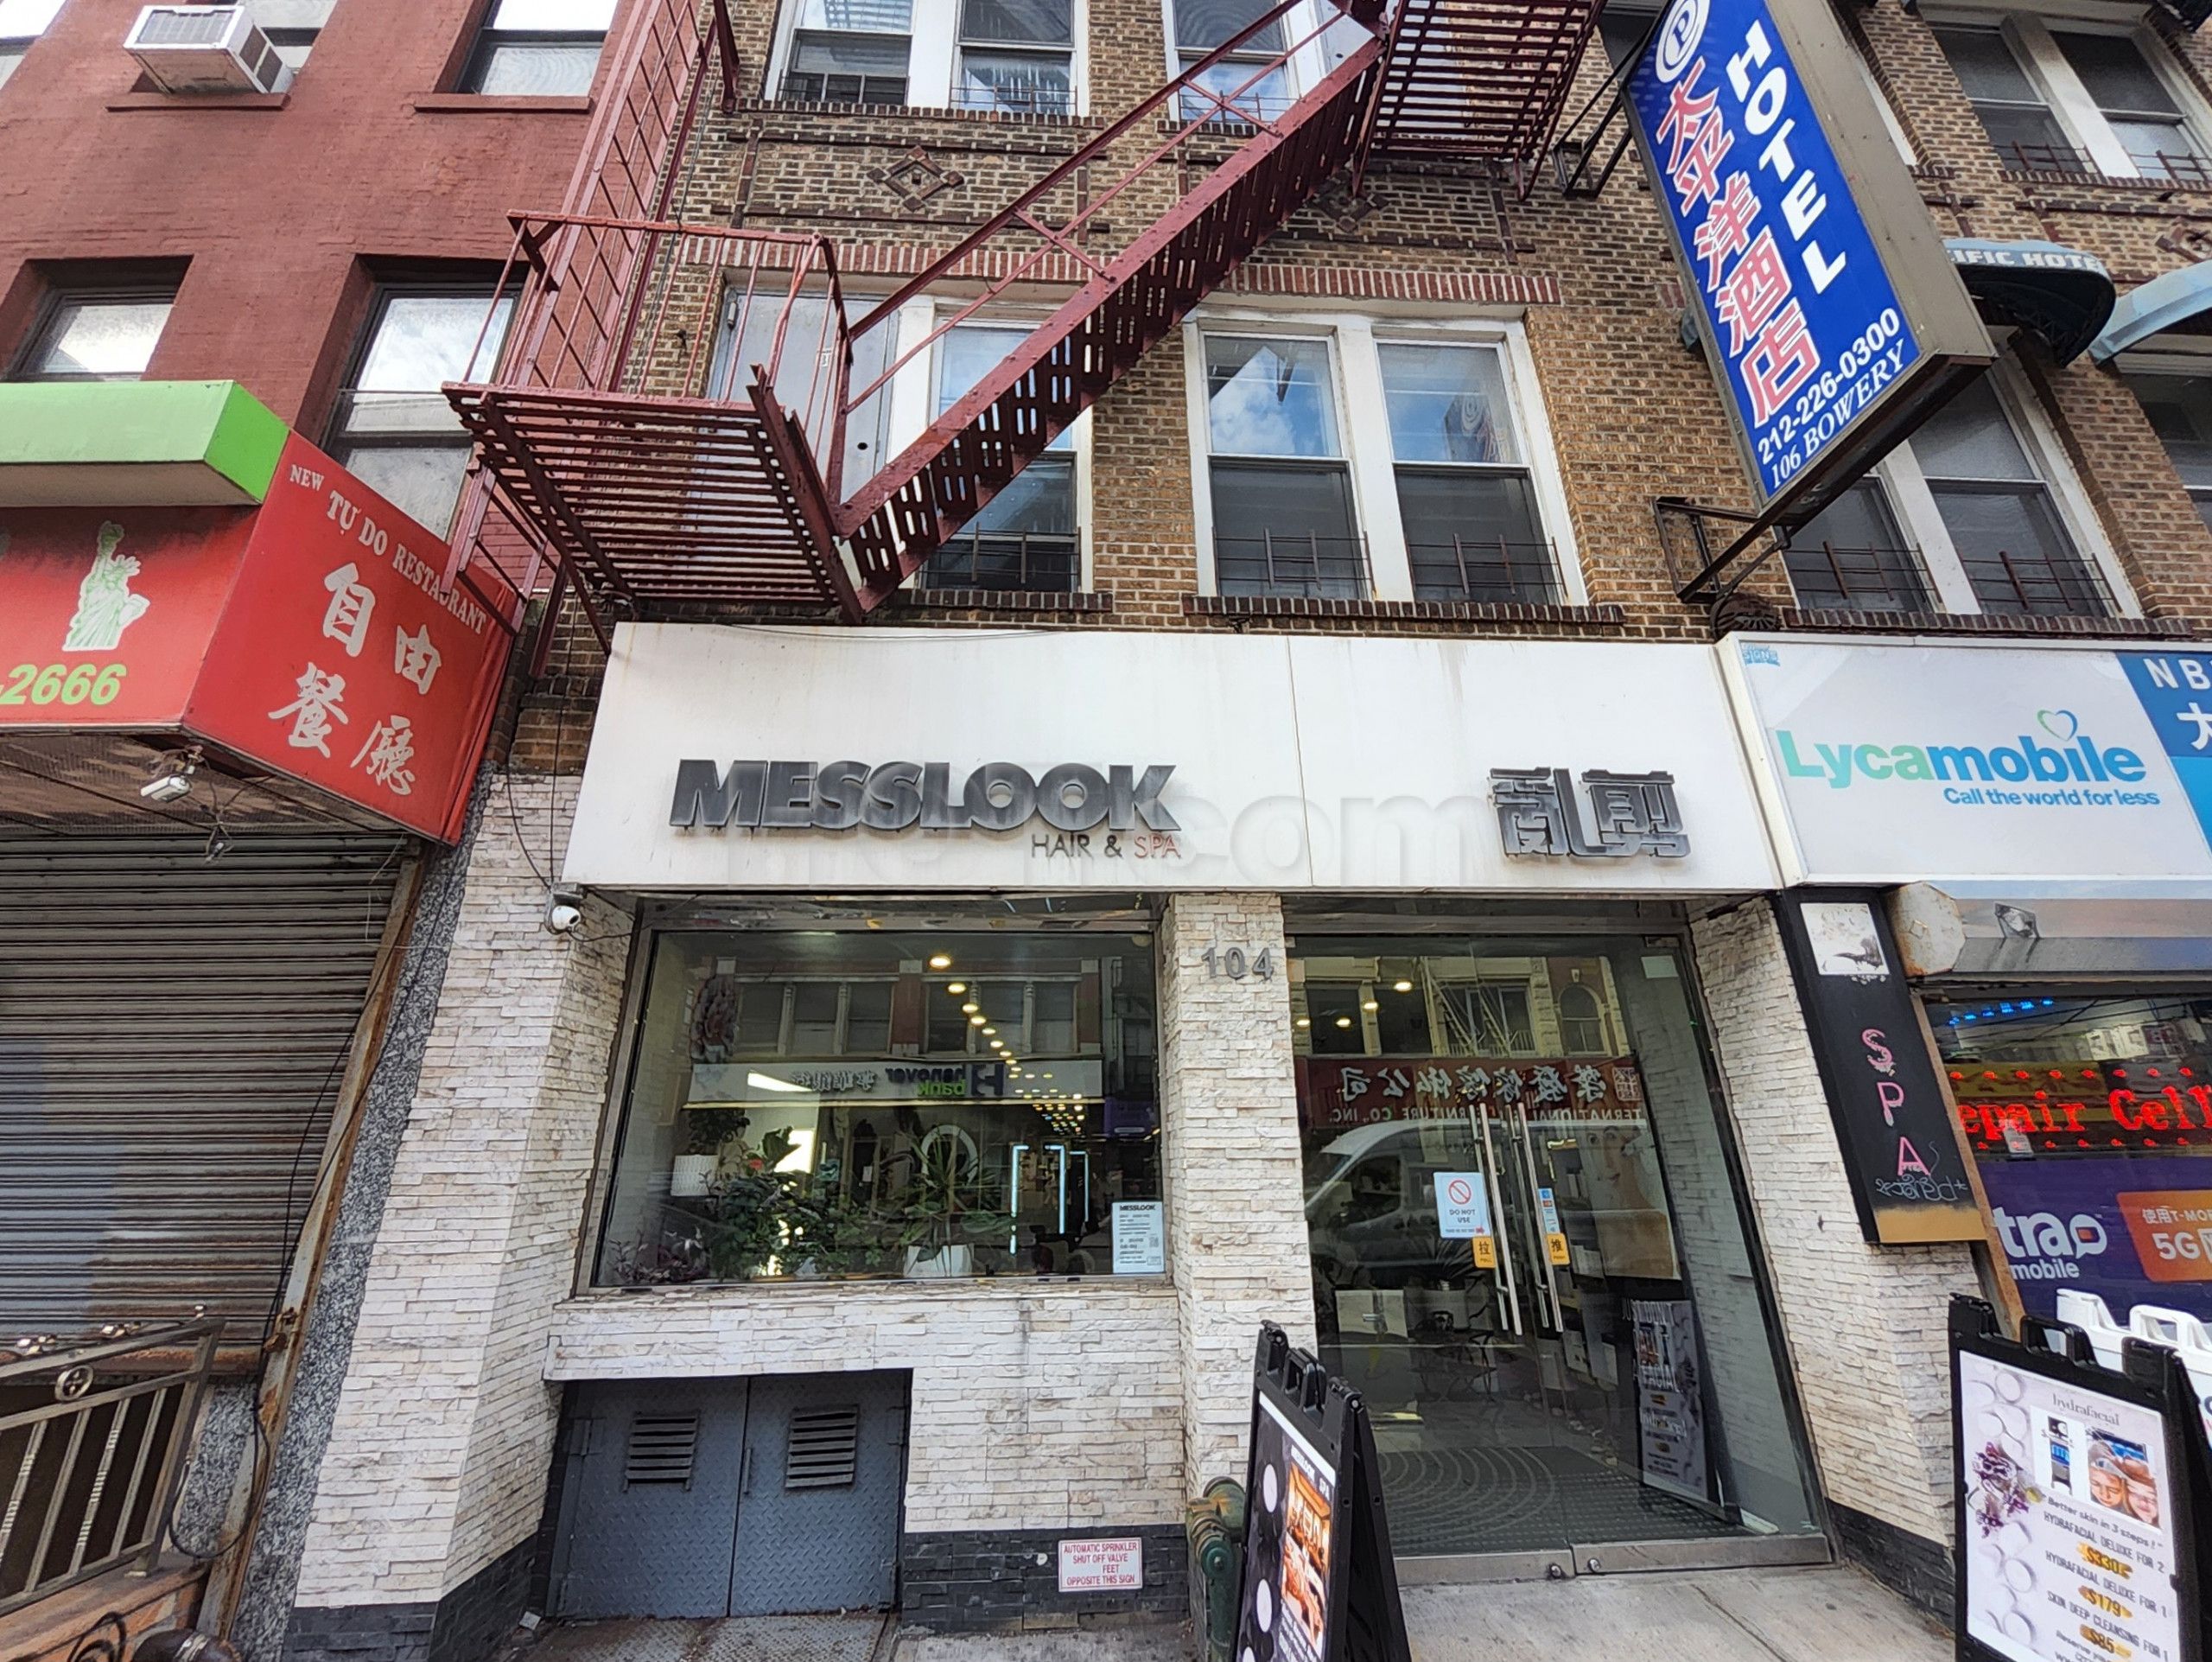 Manhattan, New York Messlook Hair and Spa